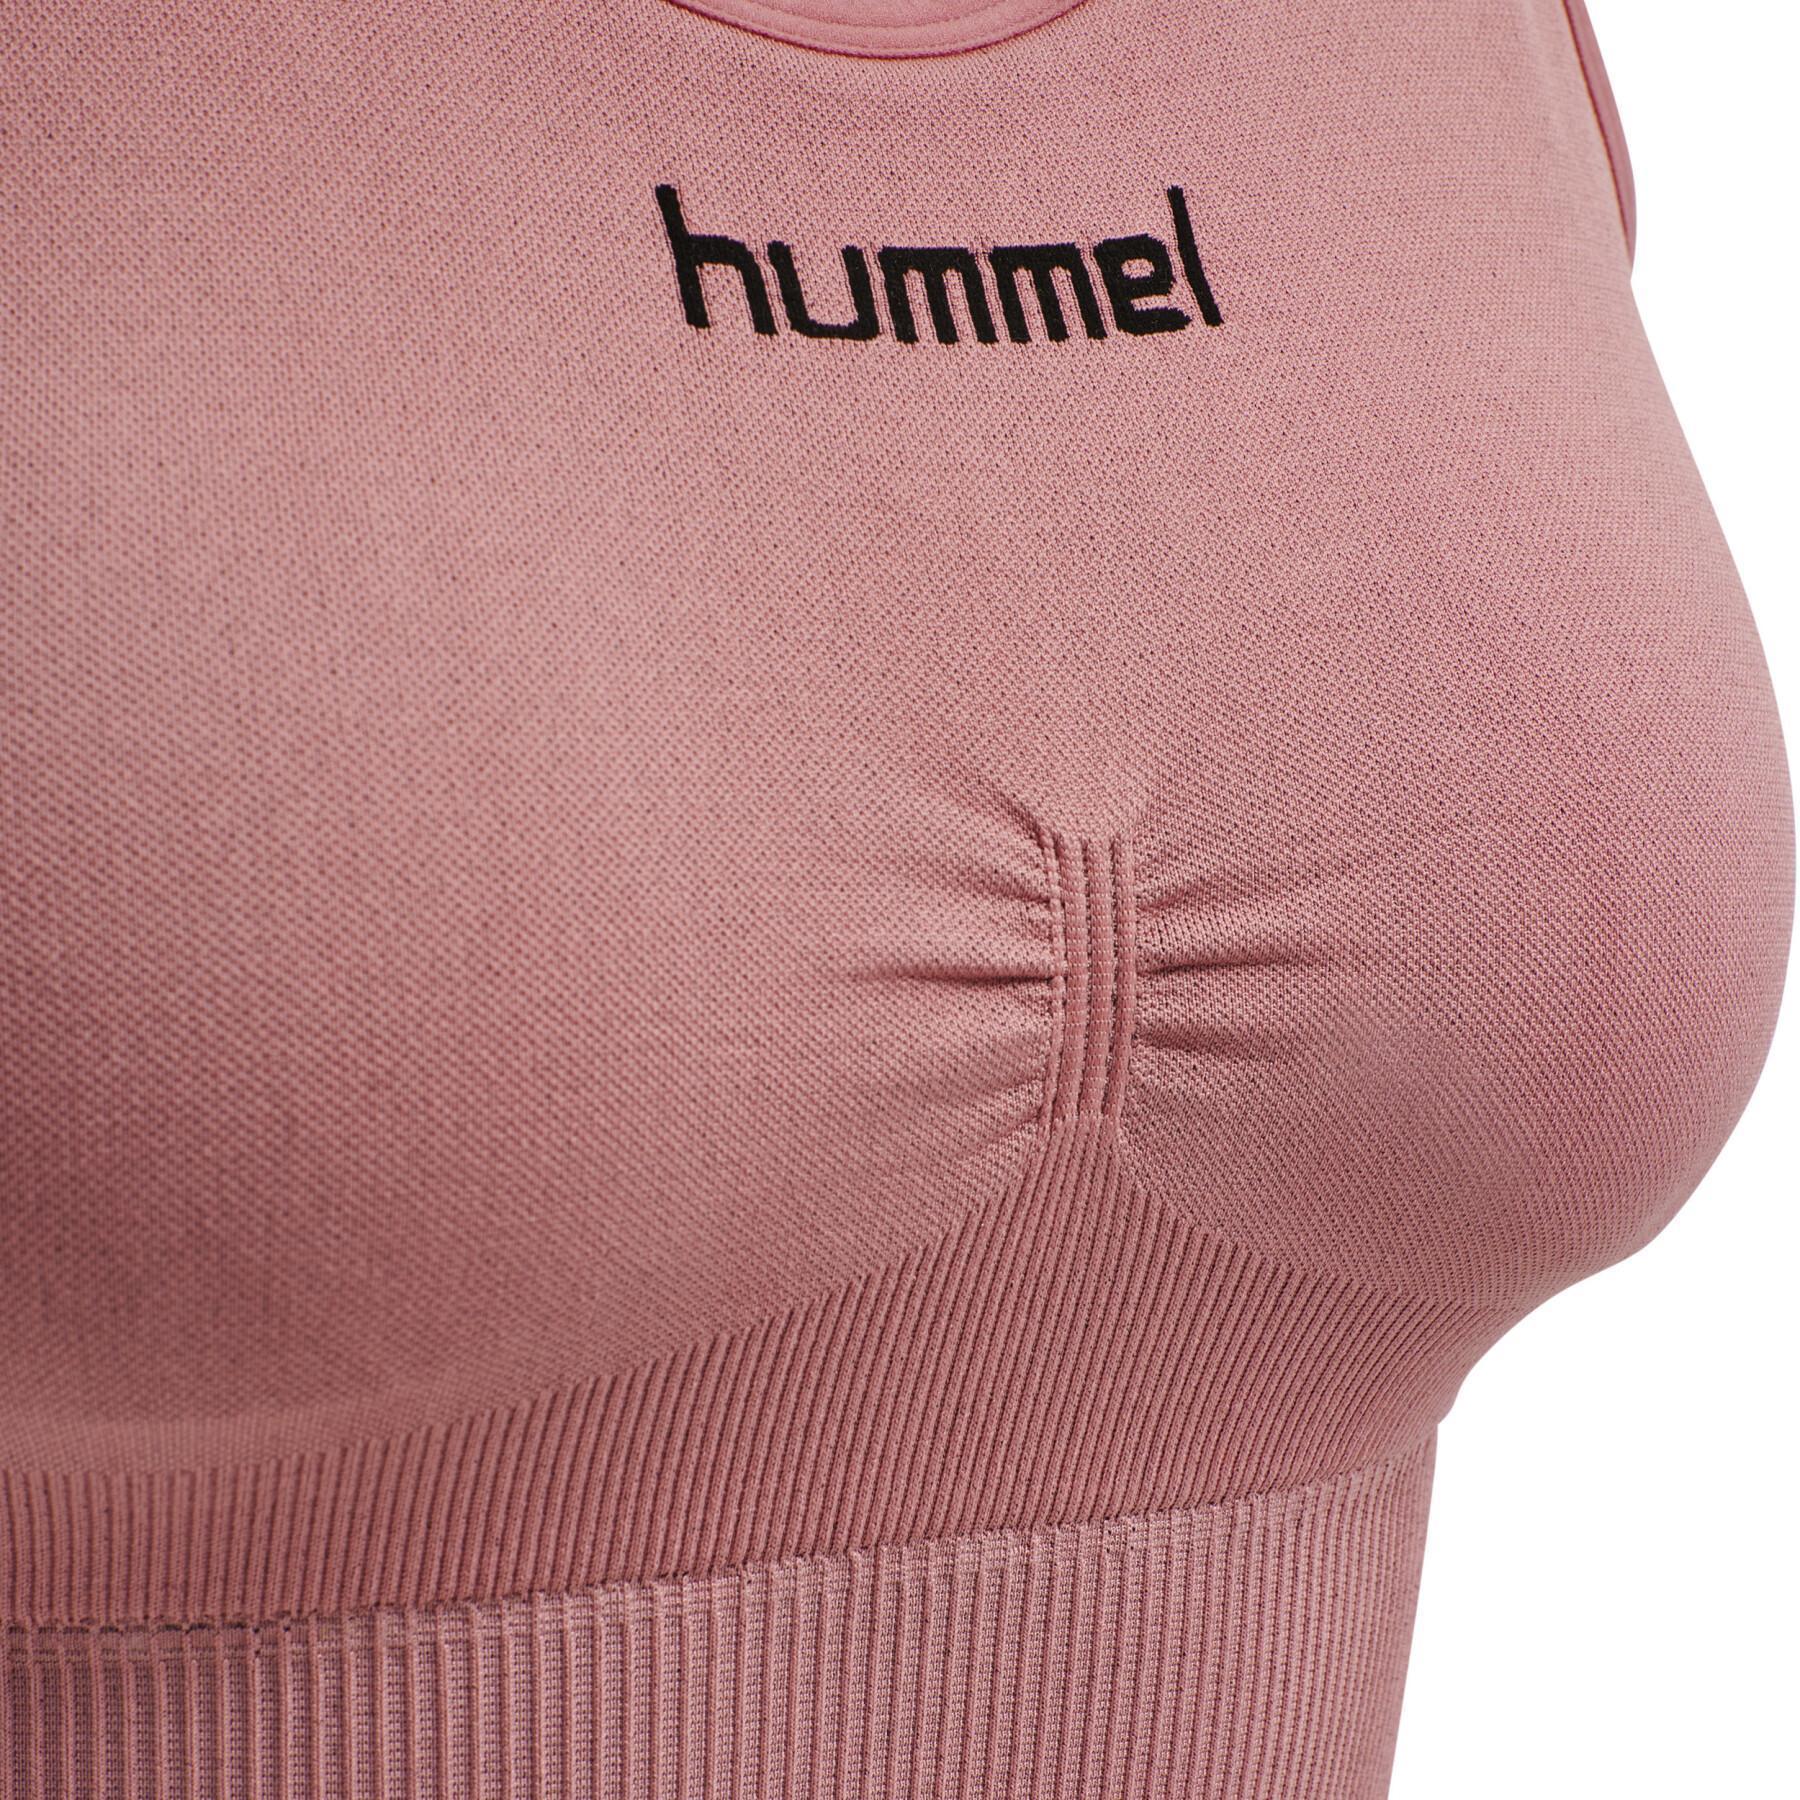 Sujetador sin costuras para mujeres Hummel First